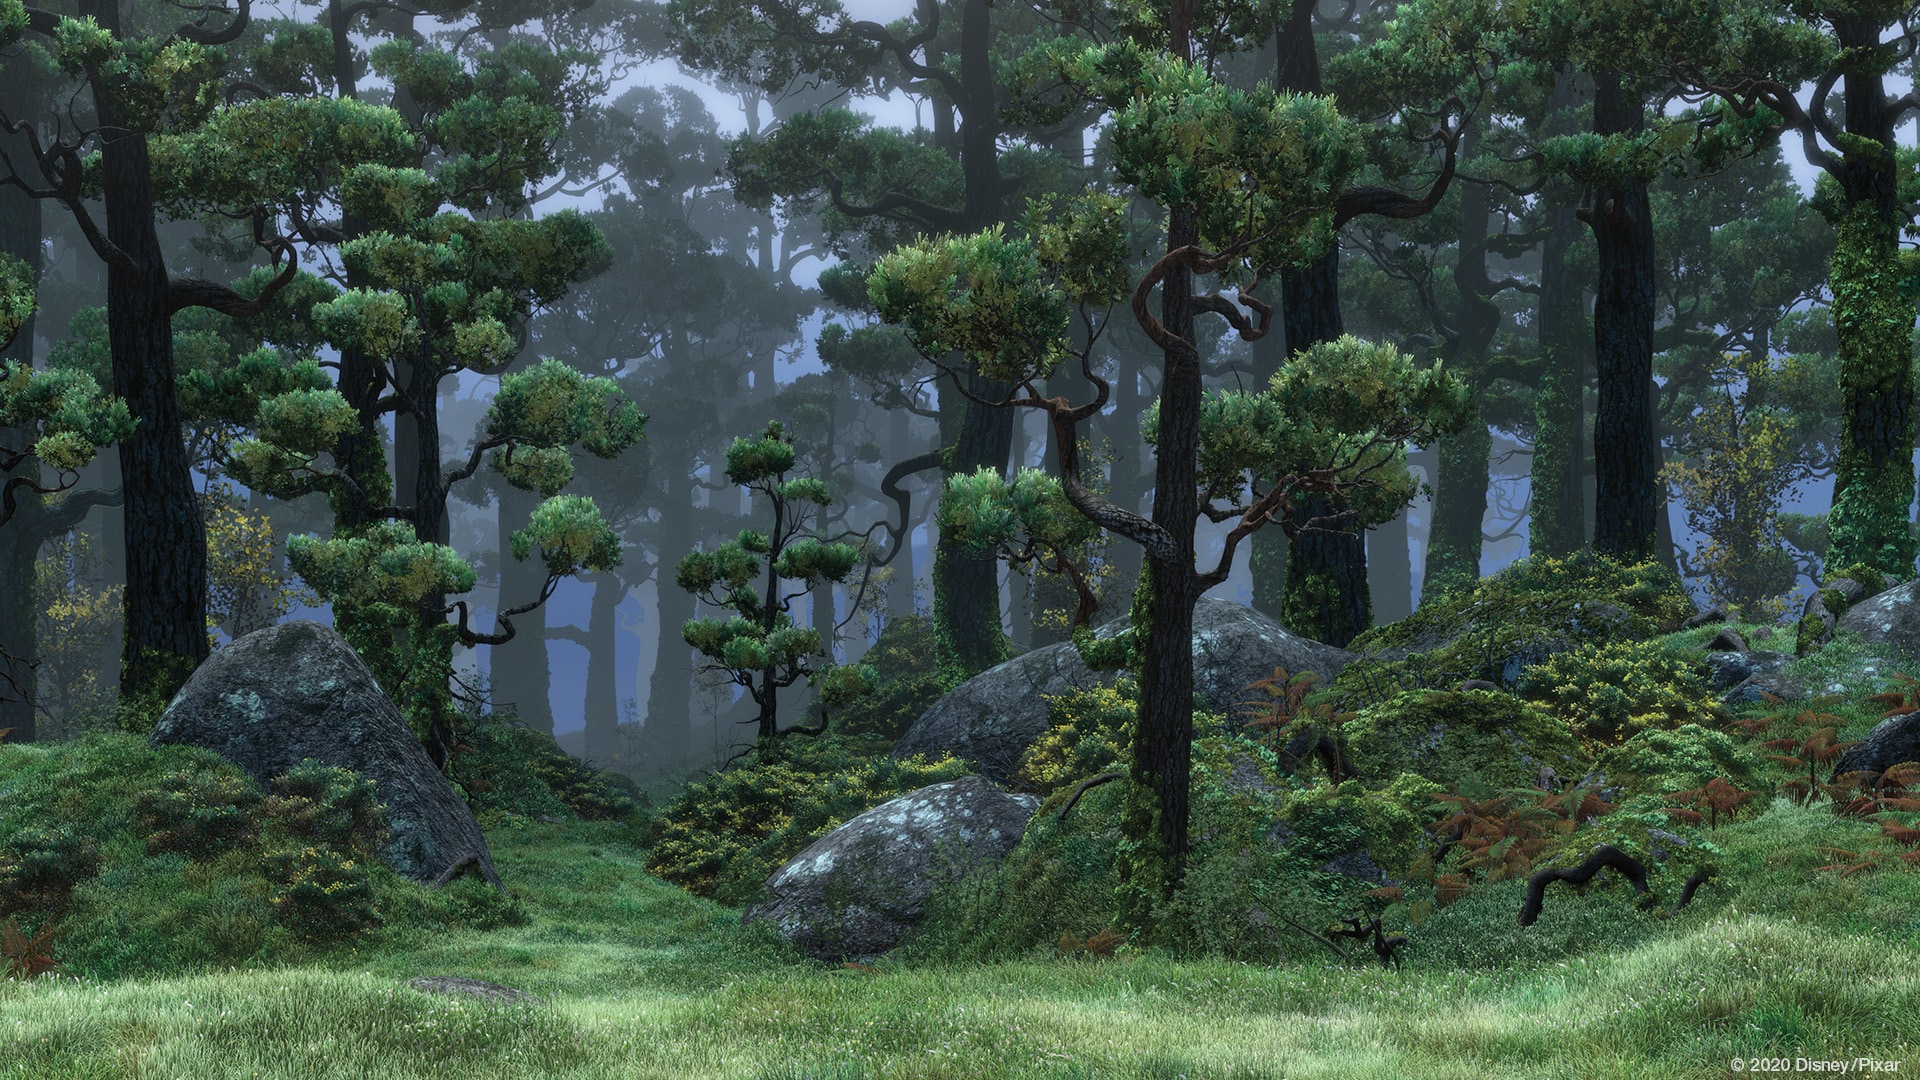 Brave - Forest from the Disney Pixar movie Brave